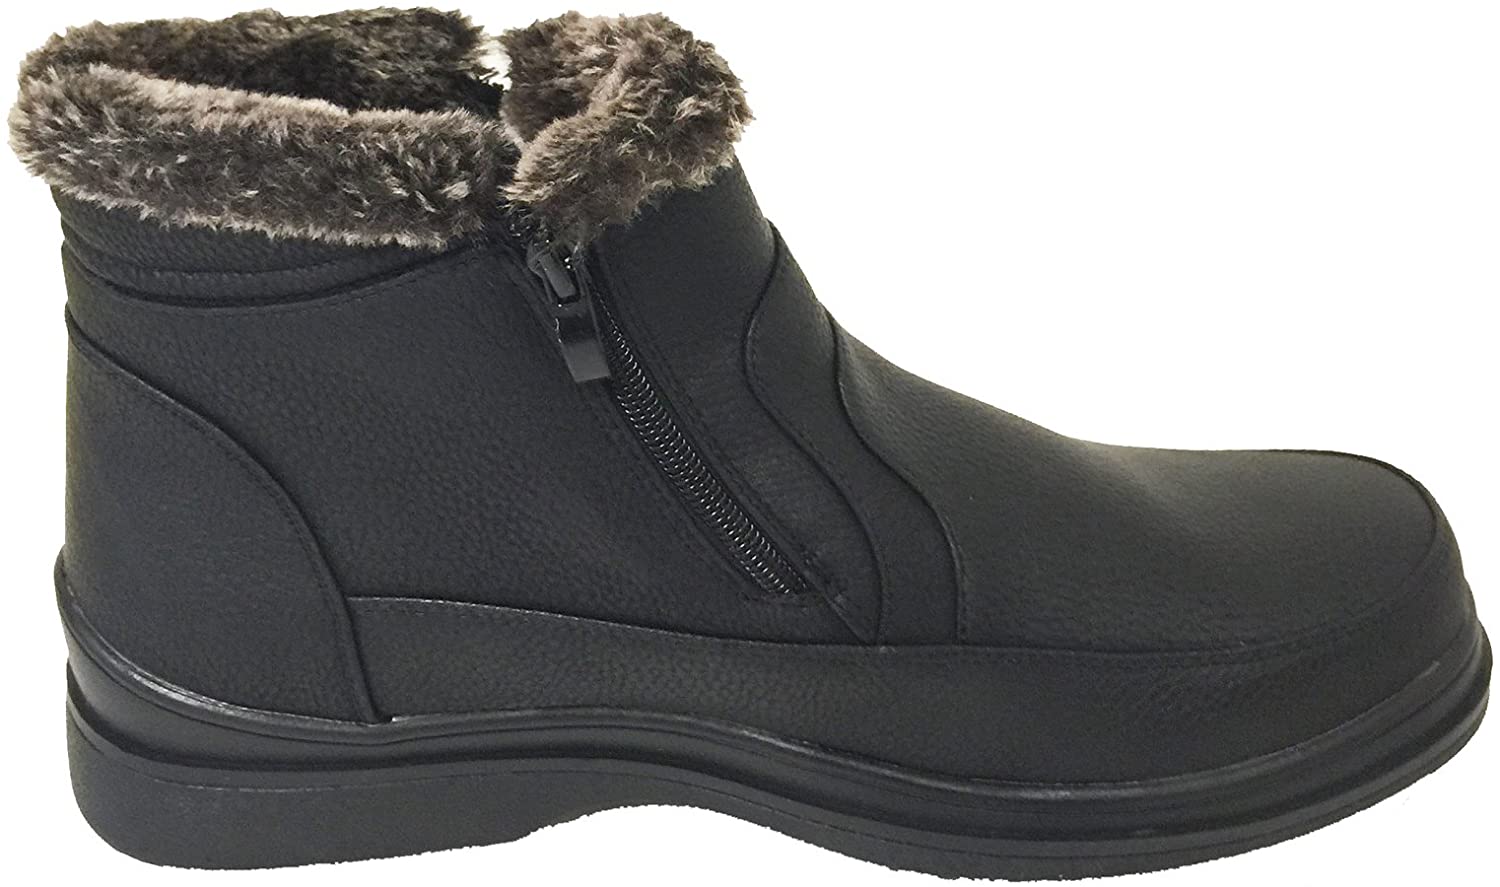 Men's Winter Boots Faux Fur Lined Dual Side Zipper Ankle Snow Comfort Shoes - image 4 of 7